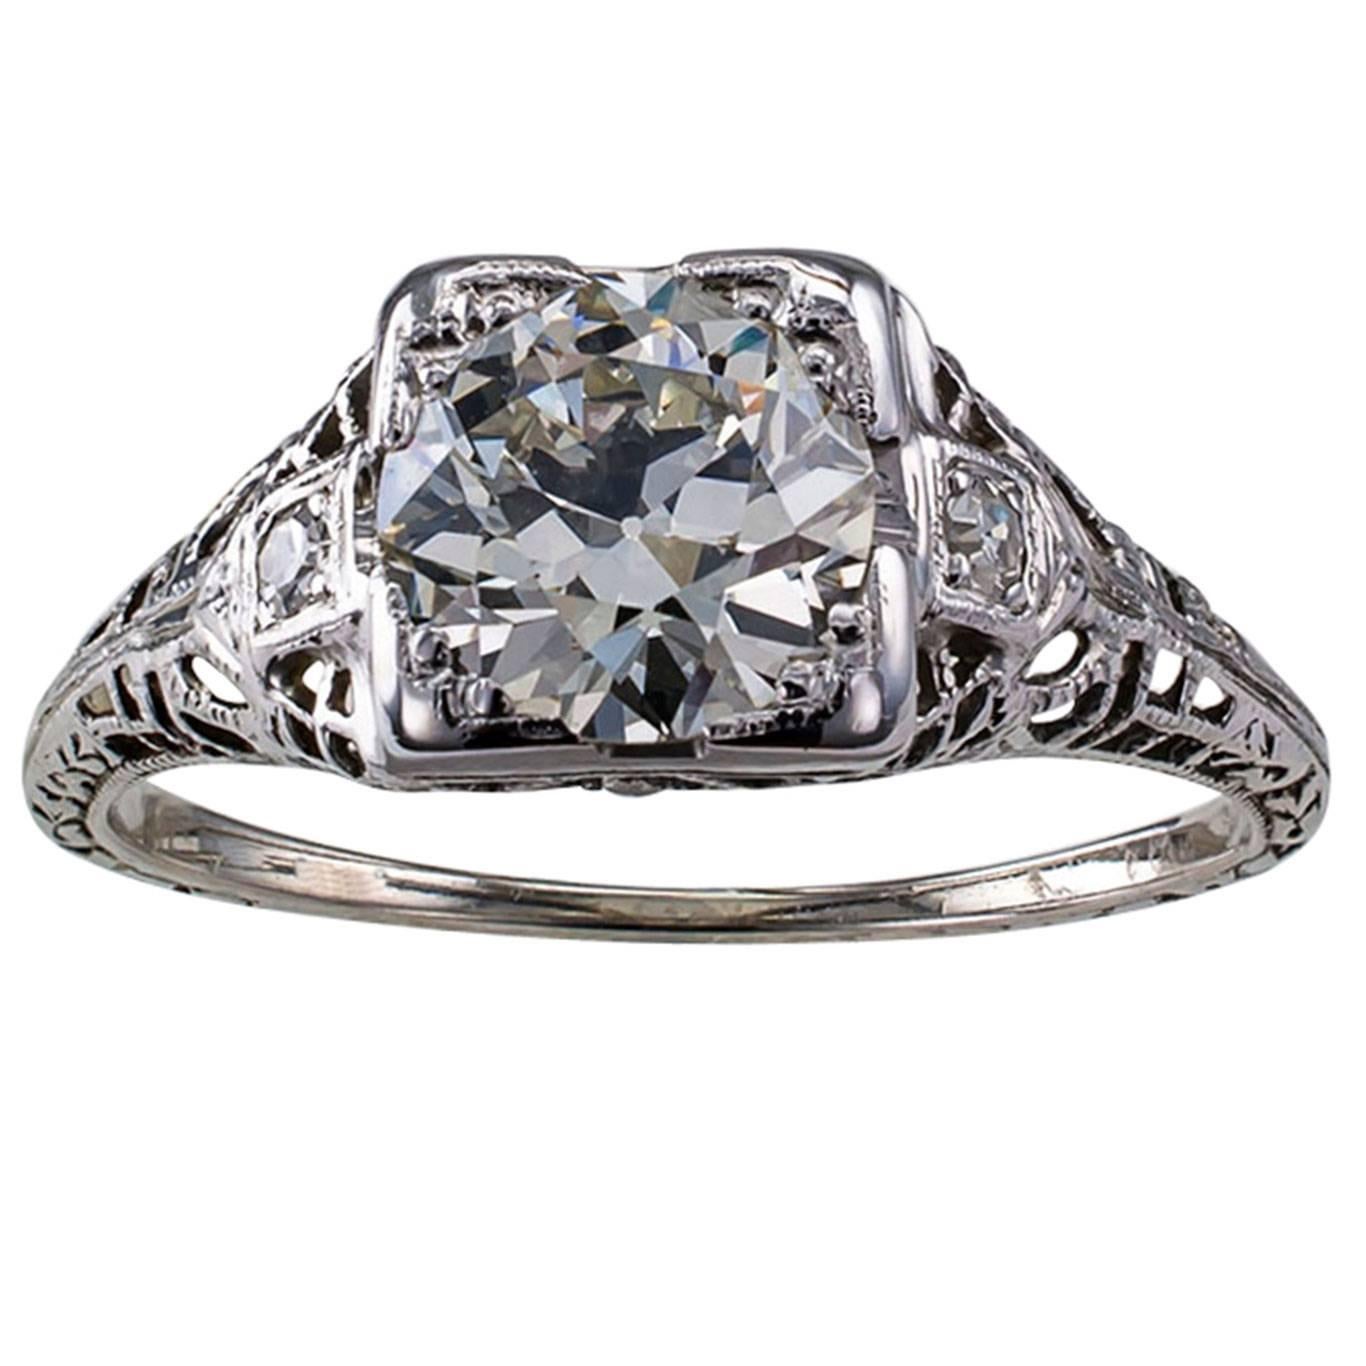 1.26 Carat Art Deco Engagement Ring